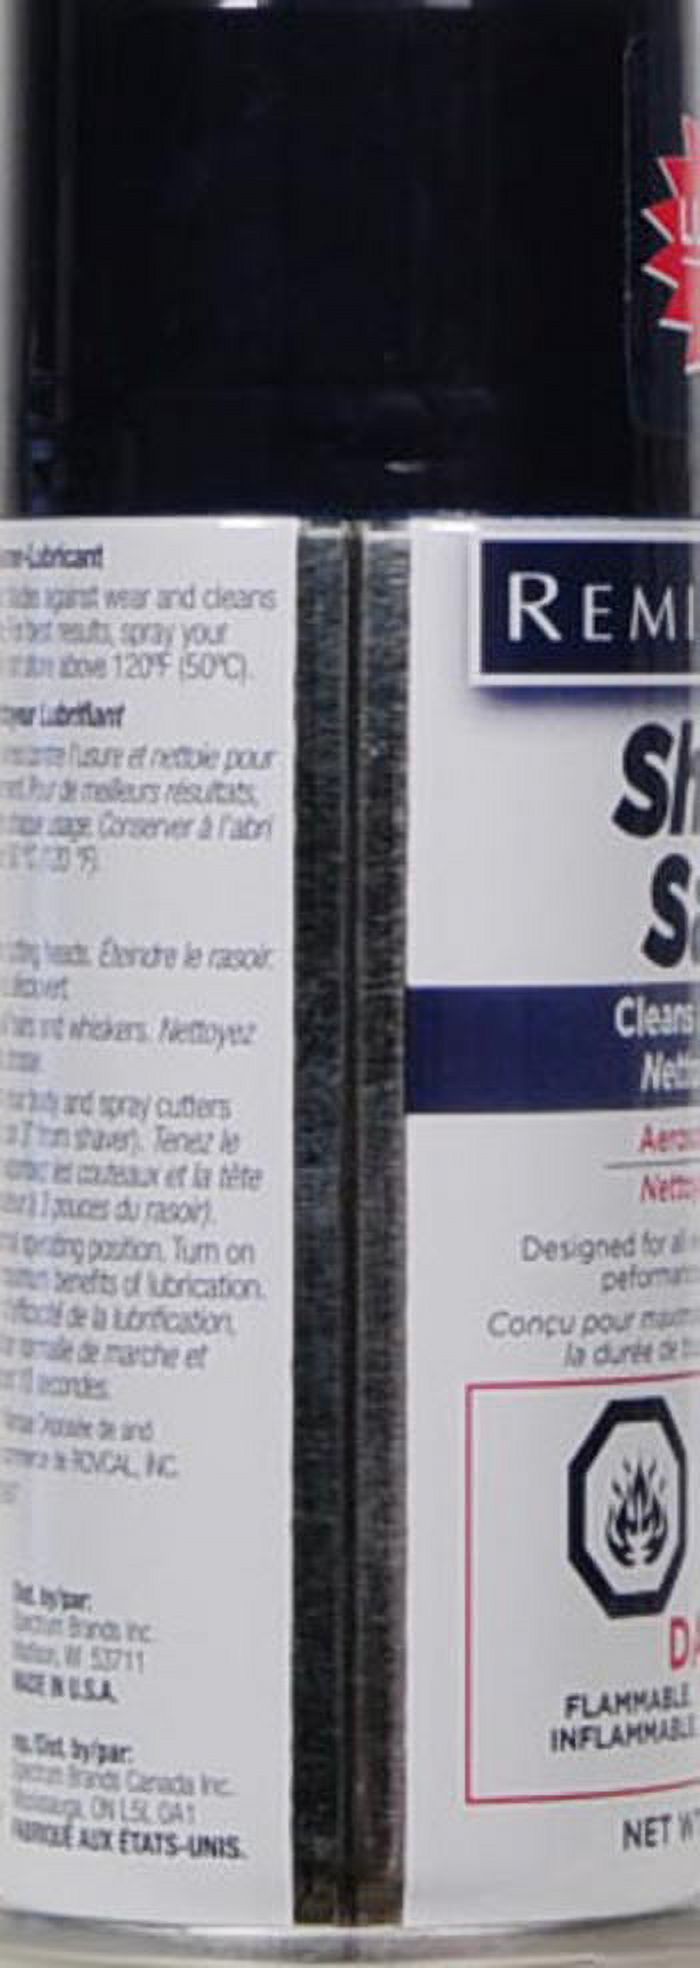 Spectrum Brands Remington Shaver Saver Aerosol Spray Cleaner, 3.8 oz - image 2 of 2